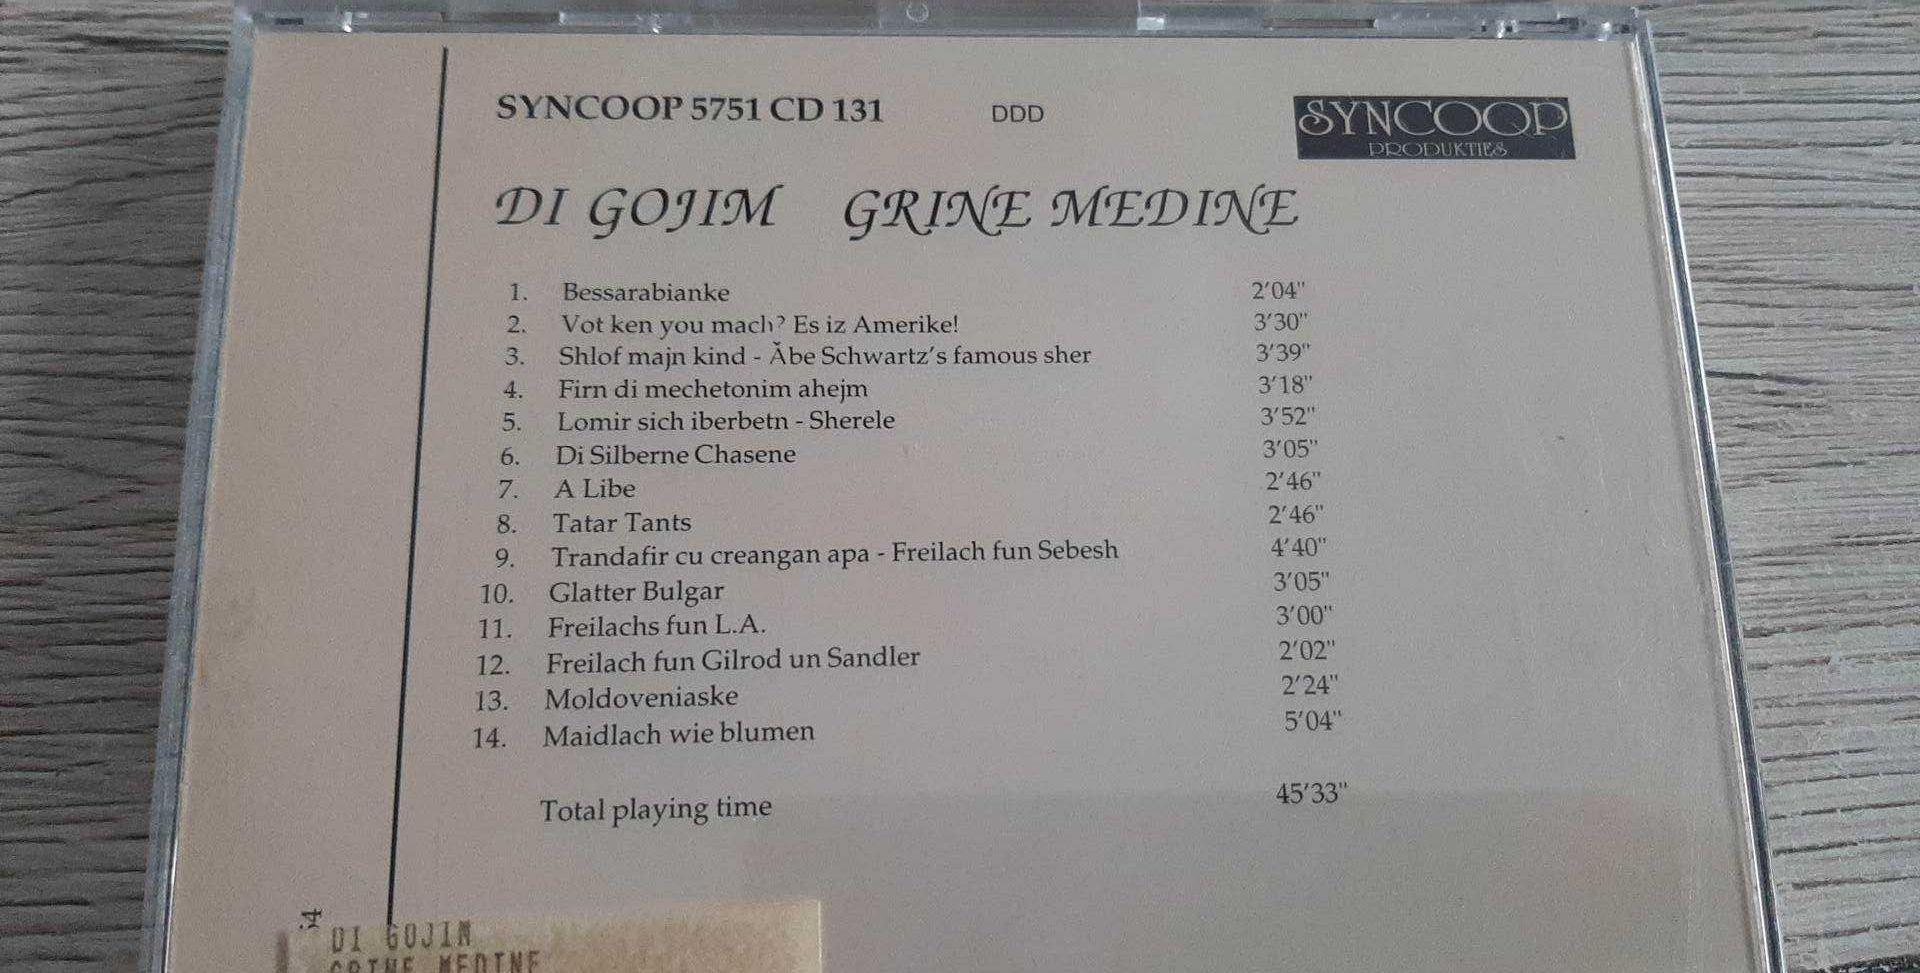 Di Gojim holenderska grupa muzyczna CD